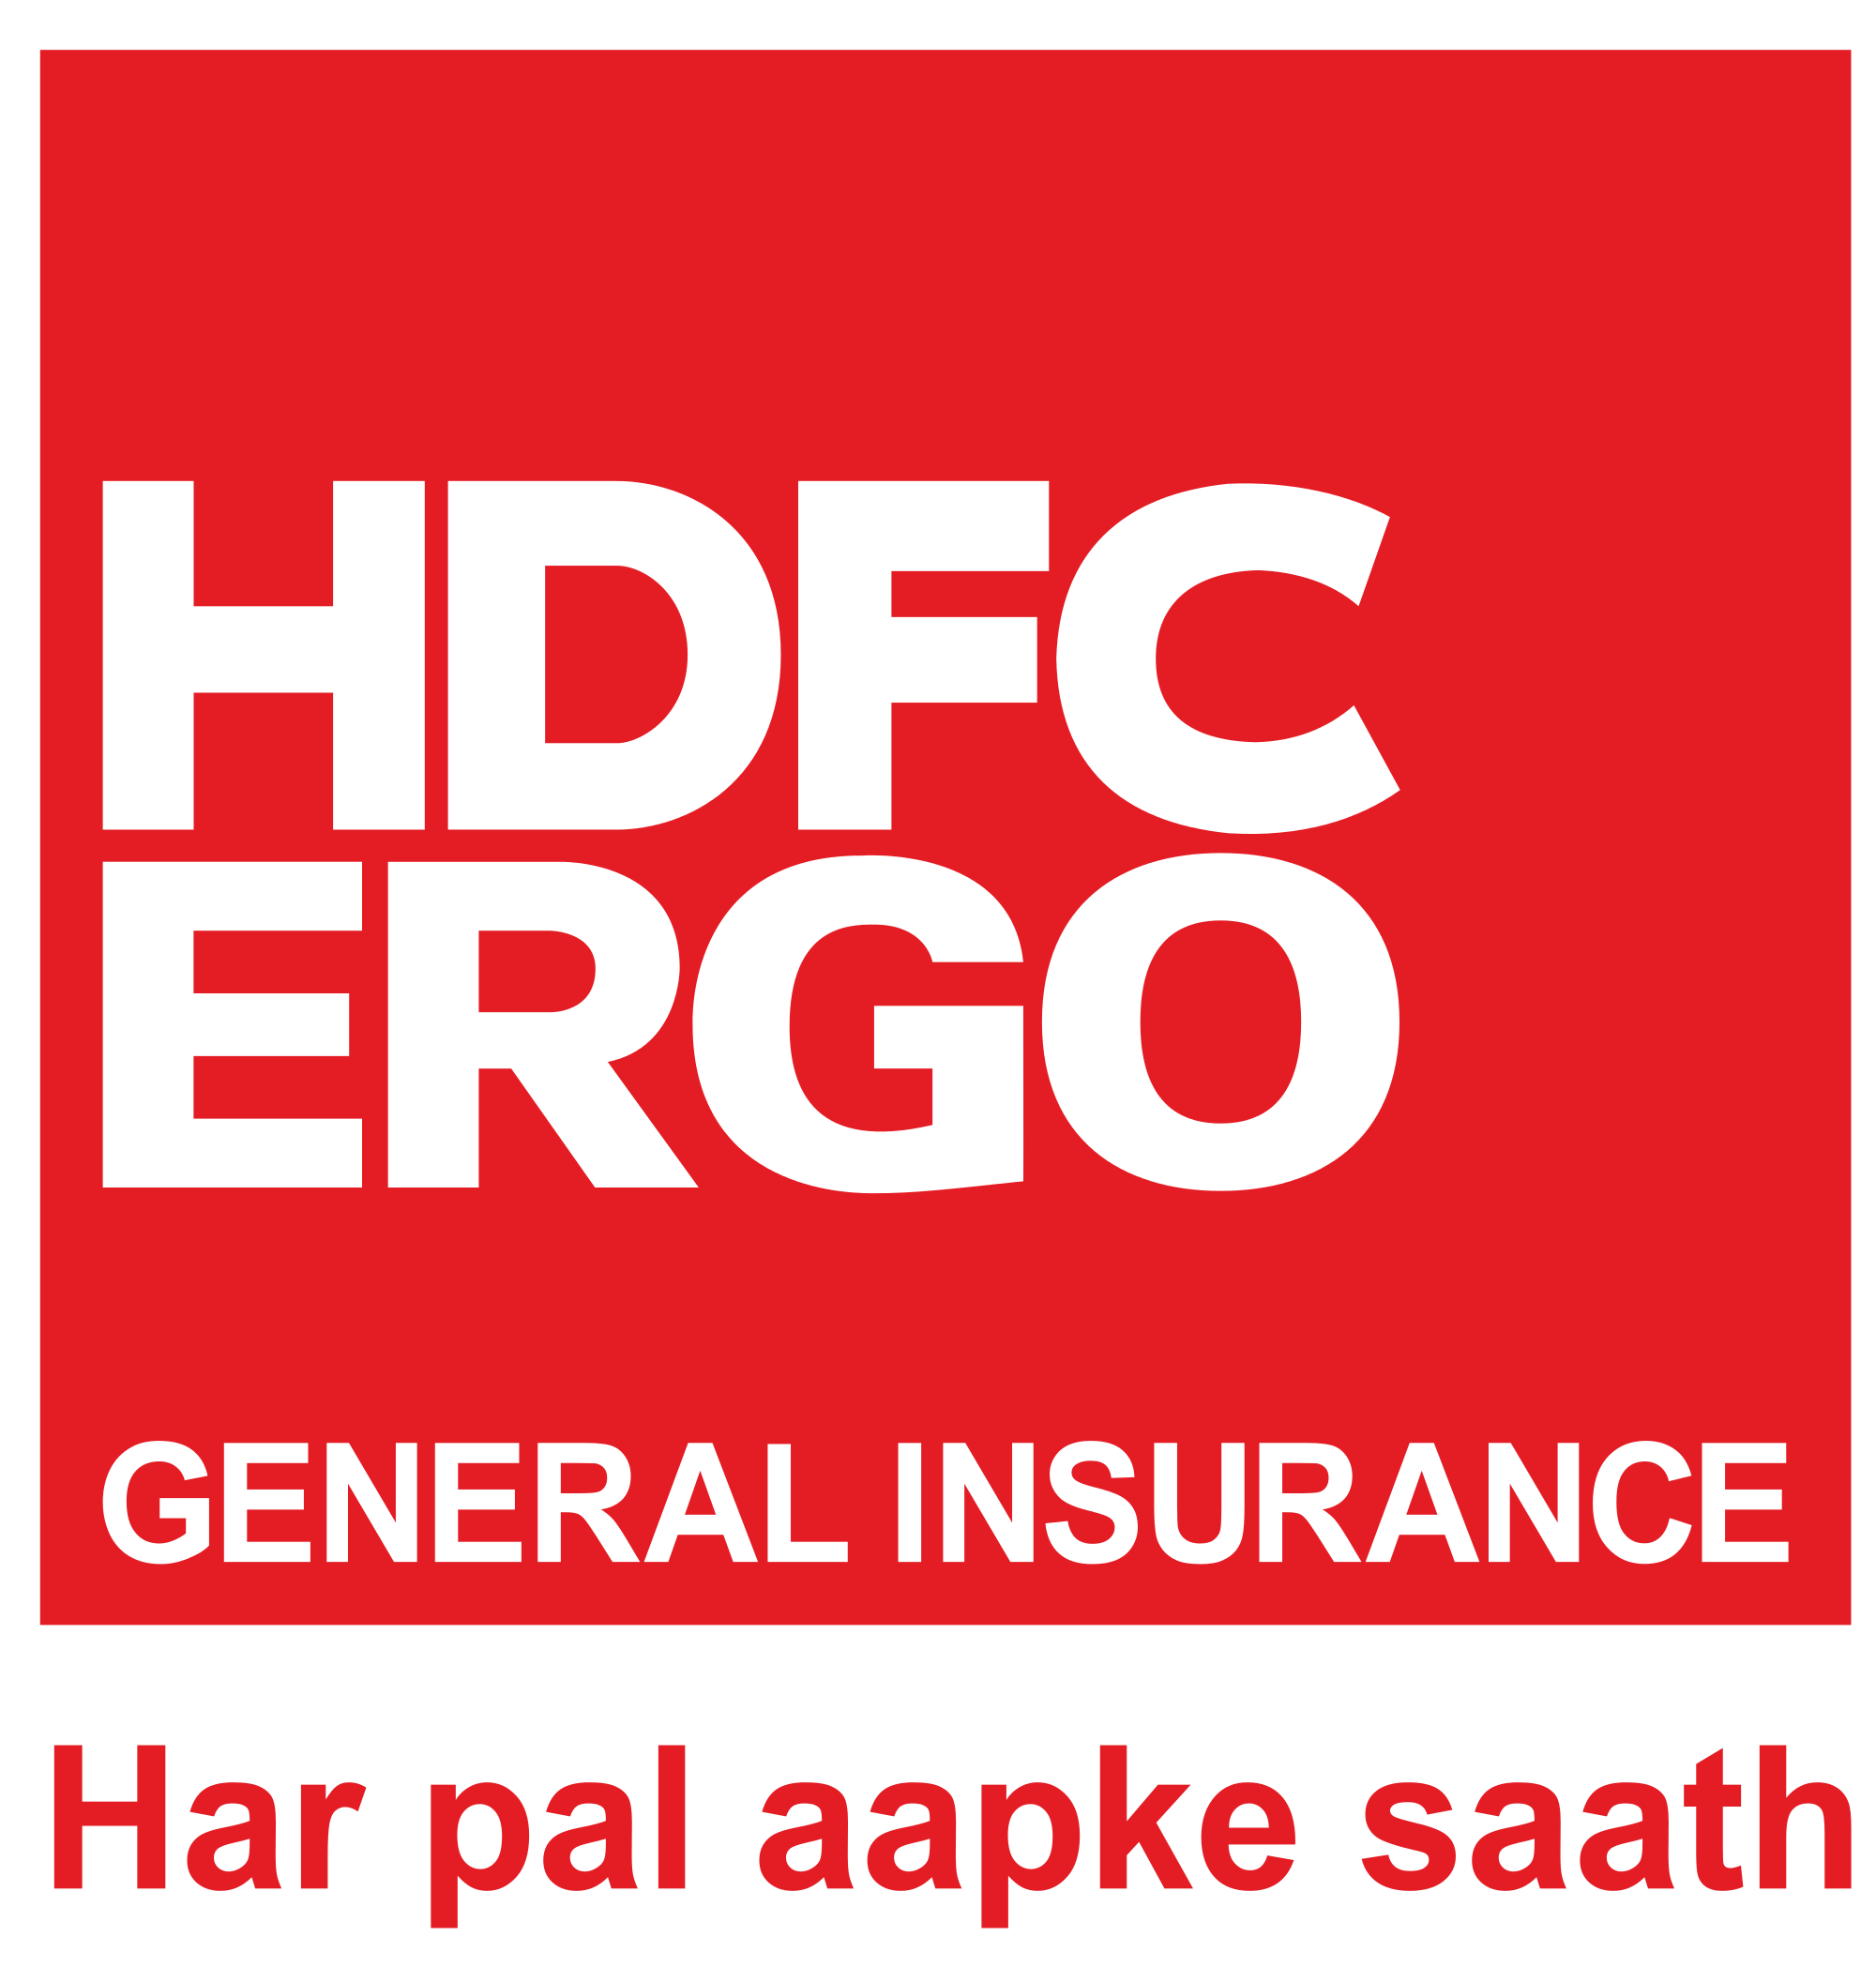 HDFC ERGO.png